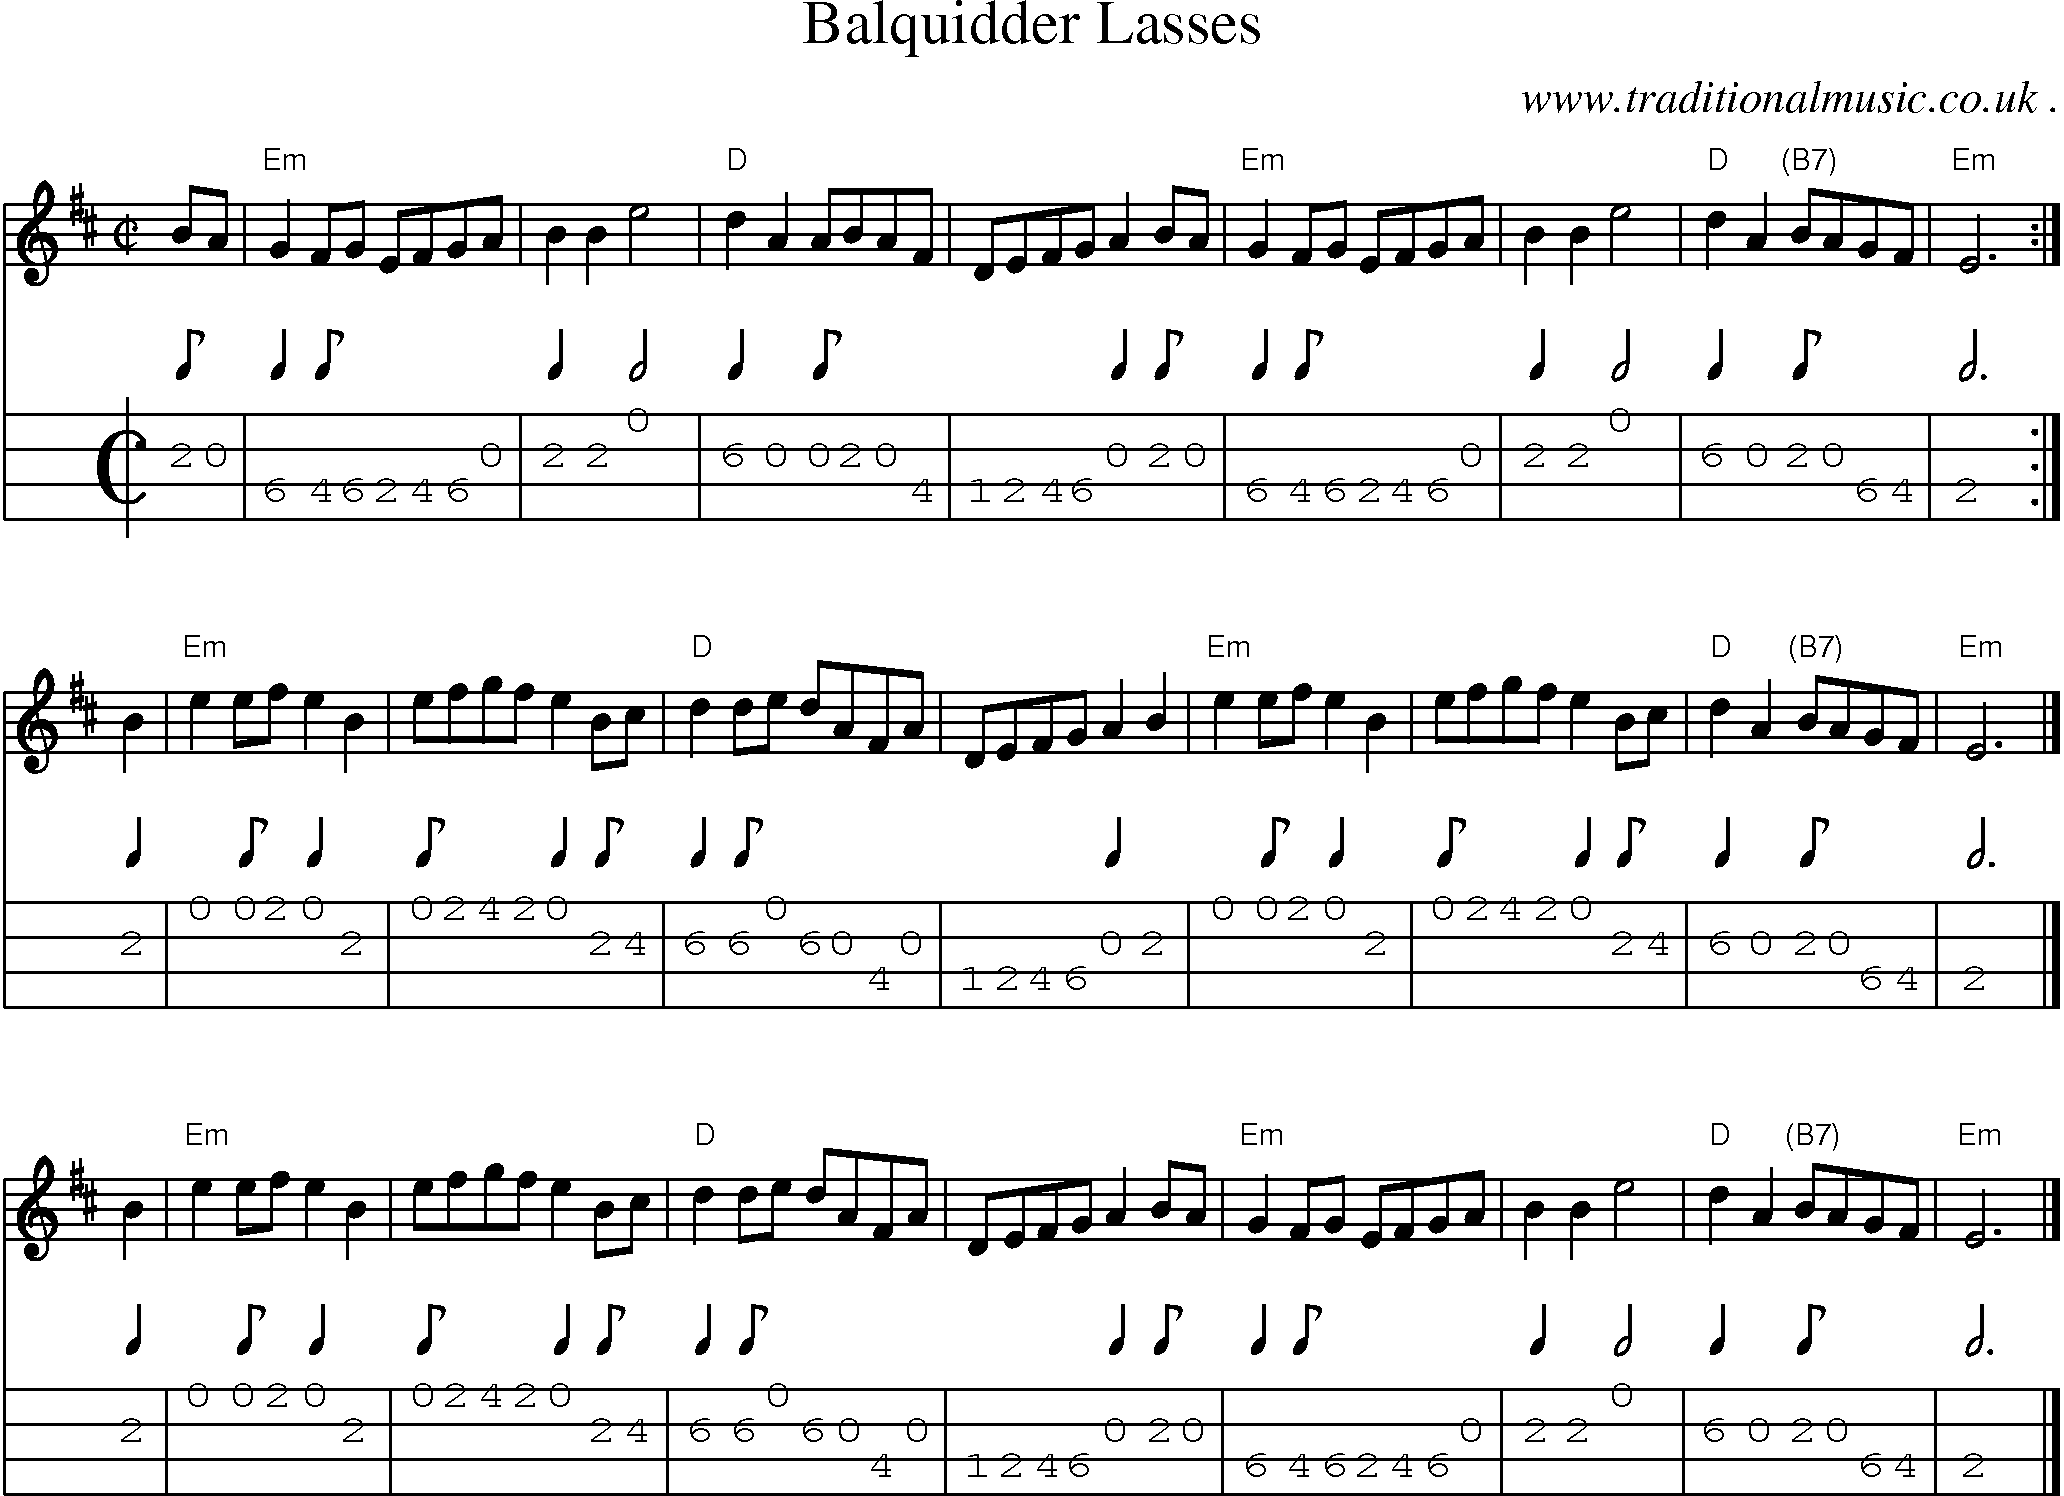 Sheet-music  score, Chords and Mandolin Tabs for Balquidder Lasses